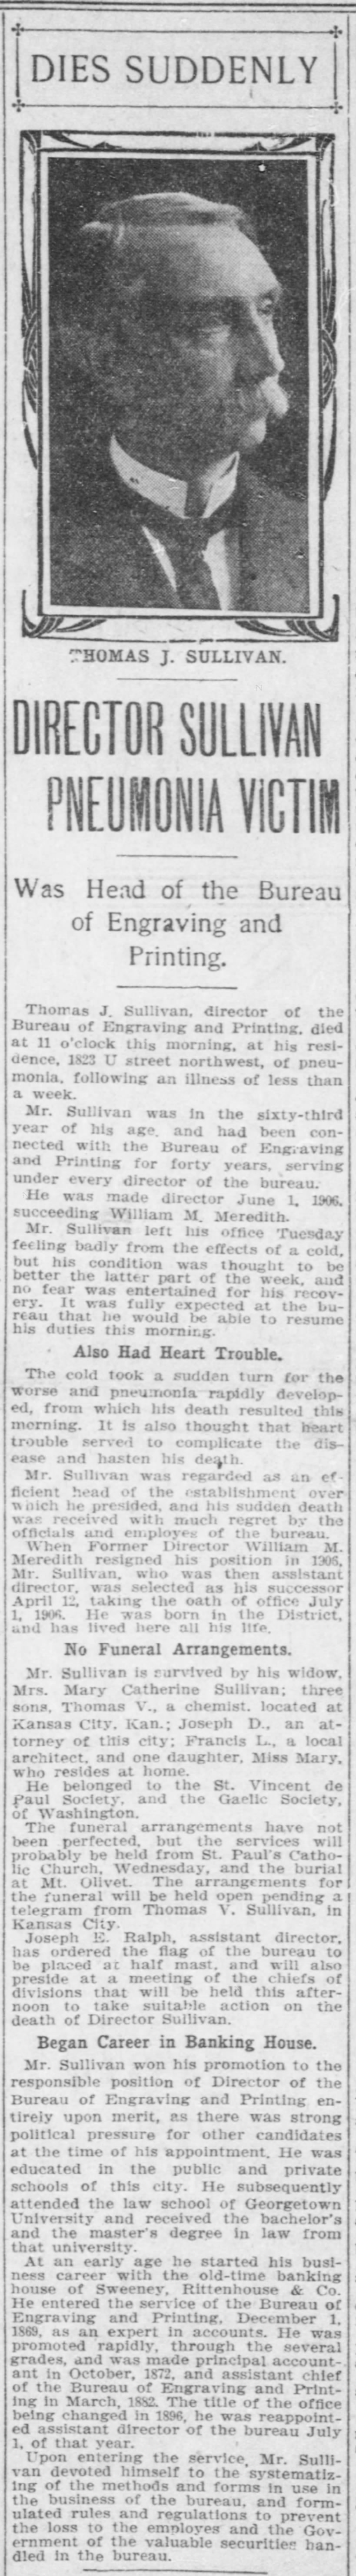 Thomas Sullivan Dies Suddenly 1908